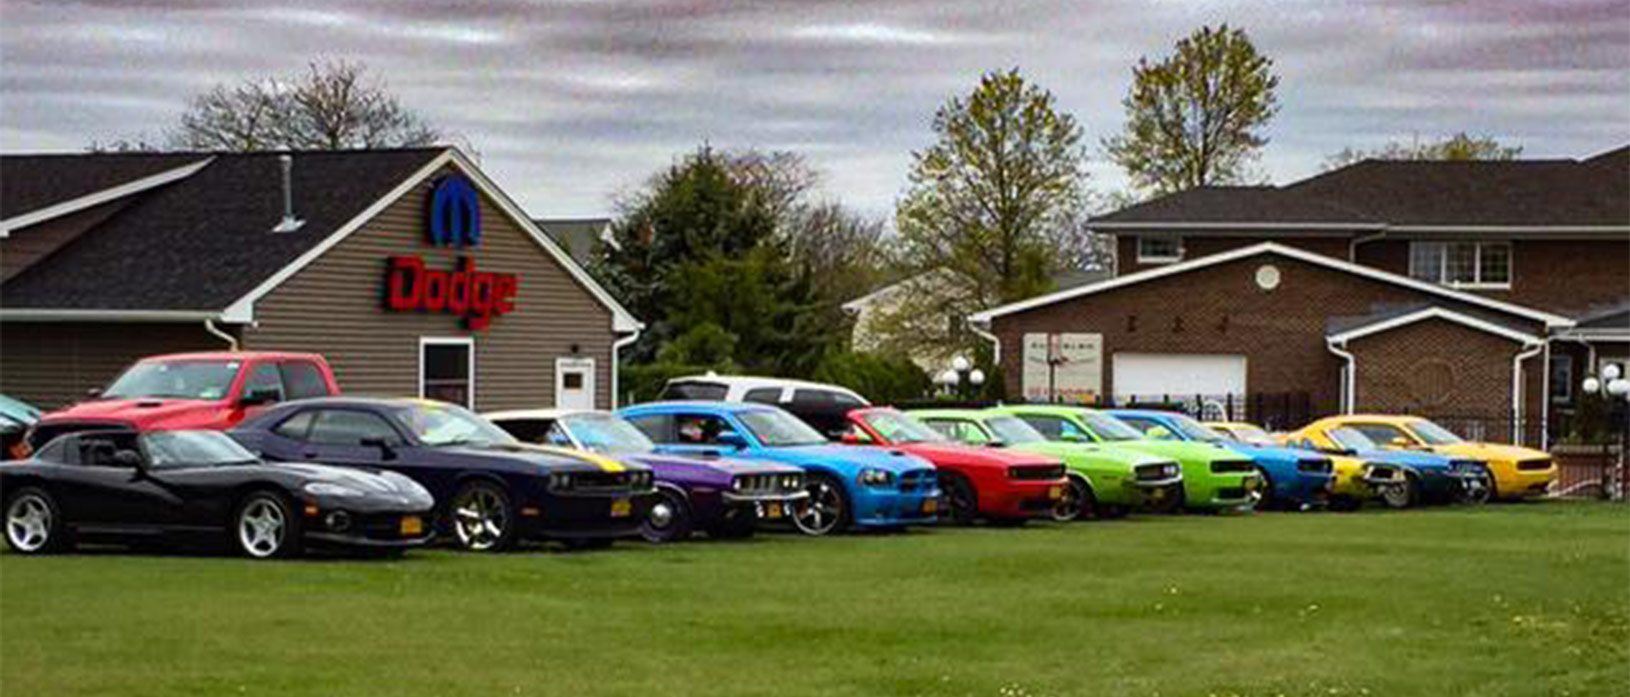 many dodge vehicles parked outside a mopar barn